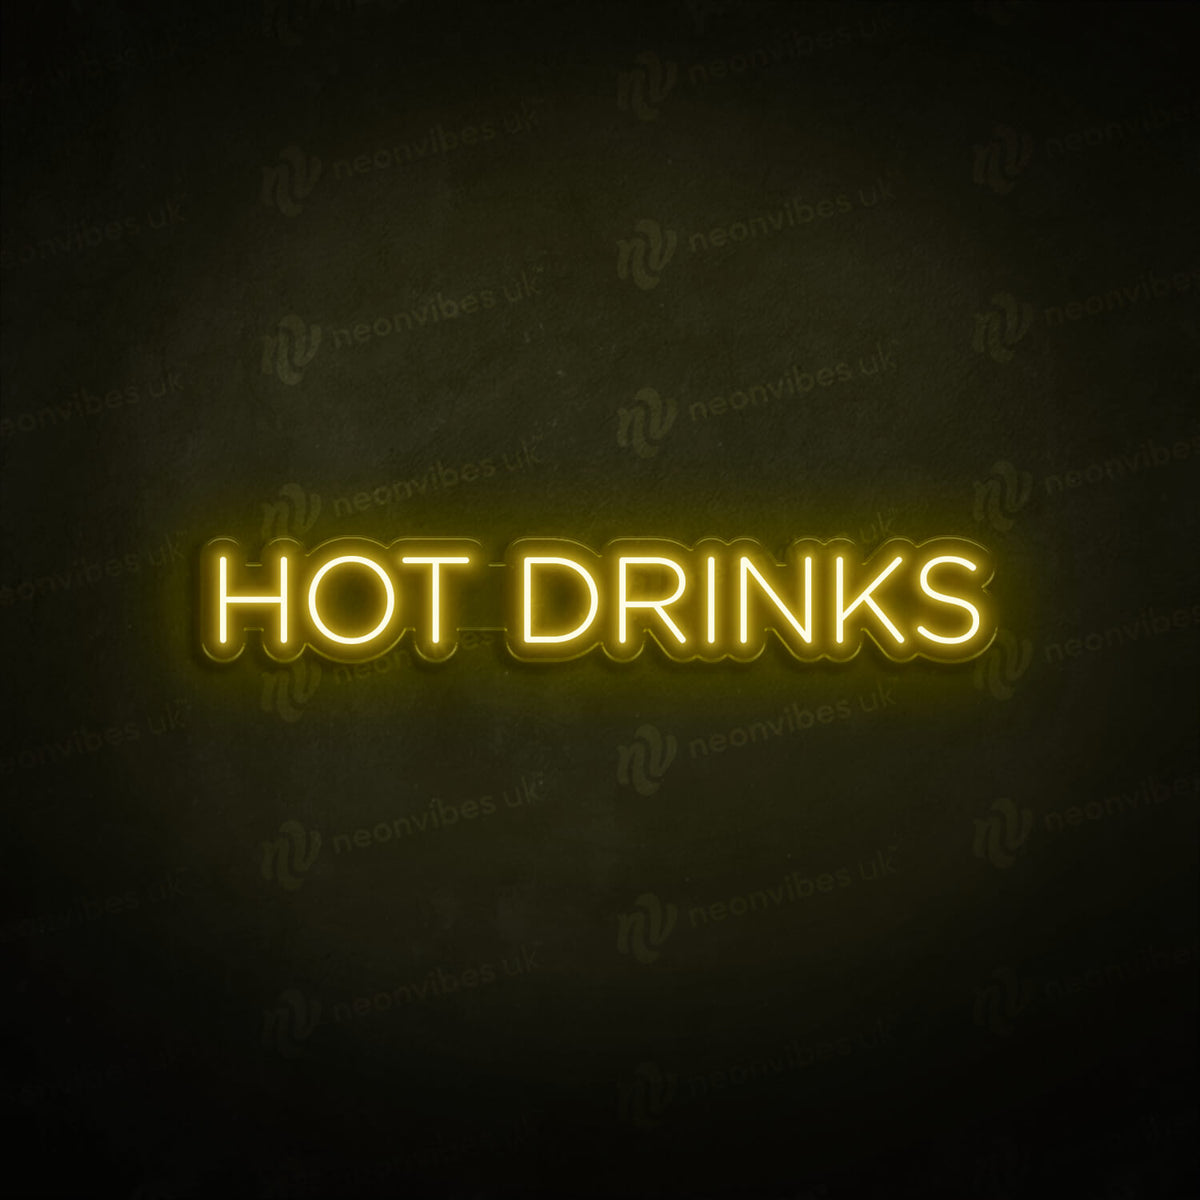 Hot Drinks neon sign